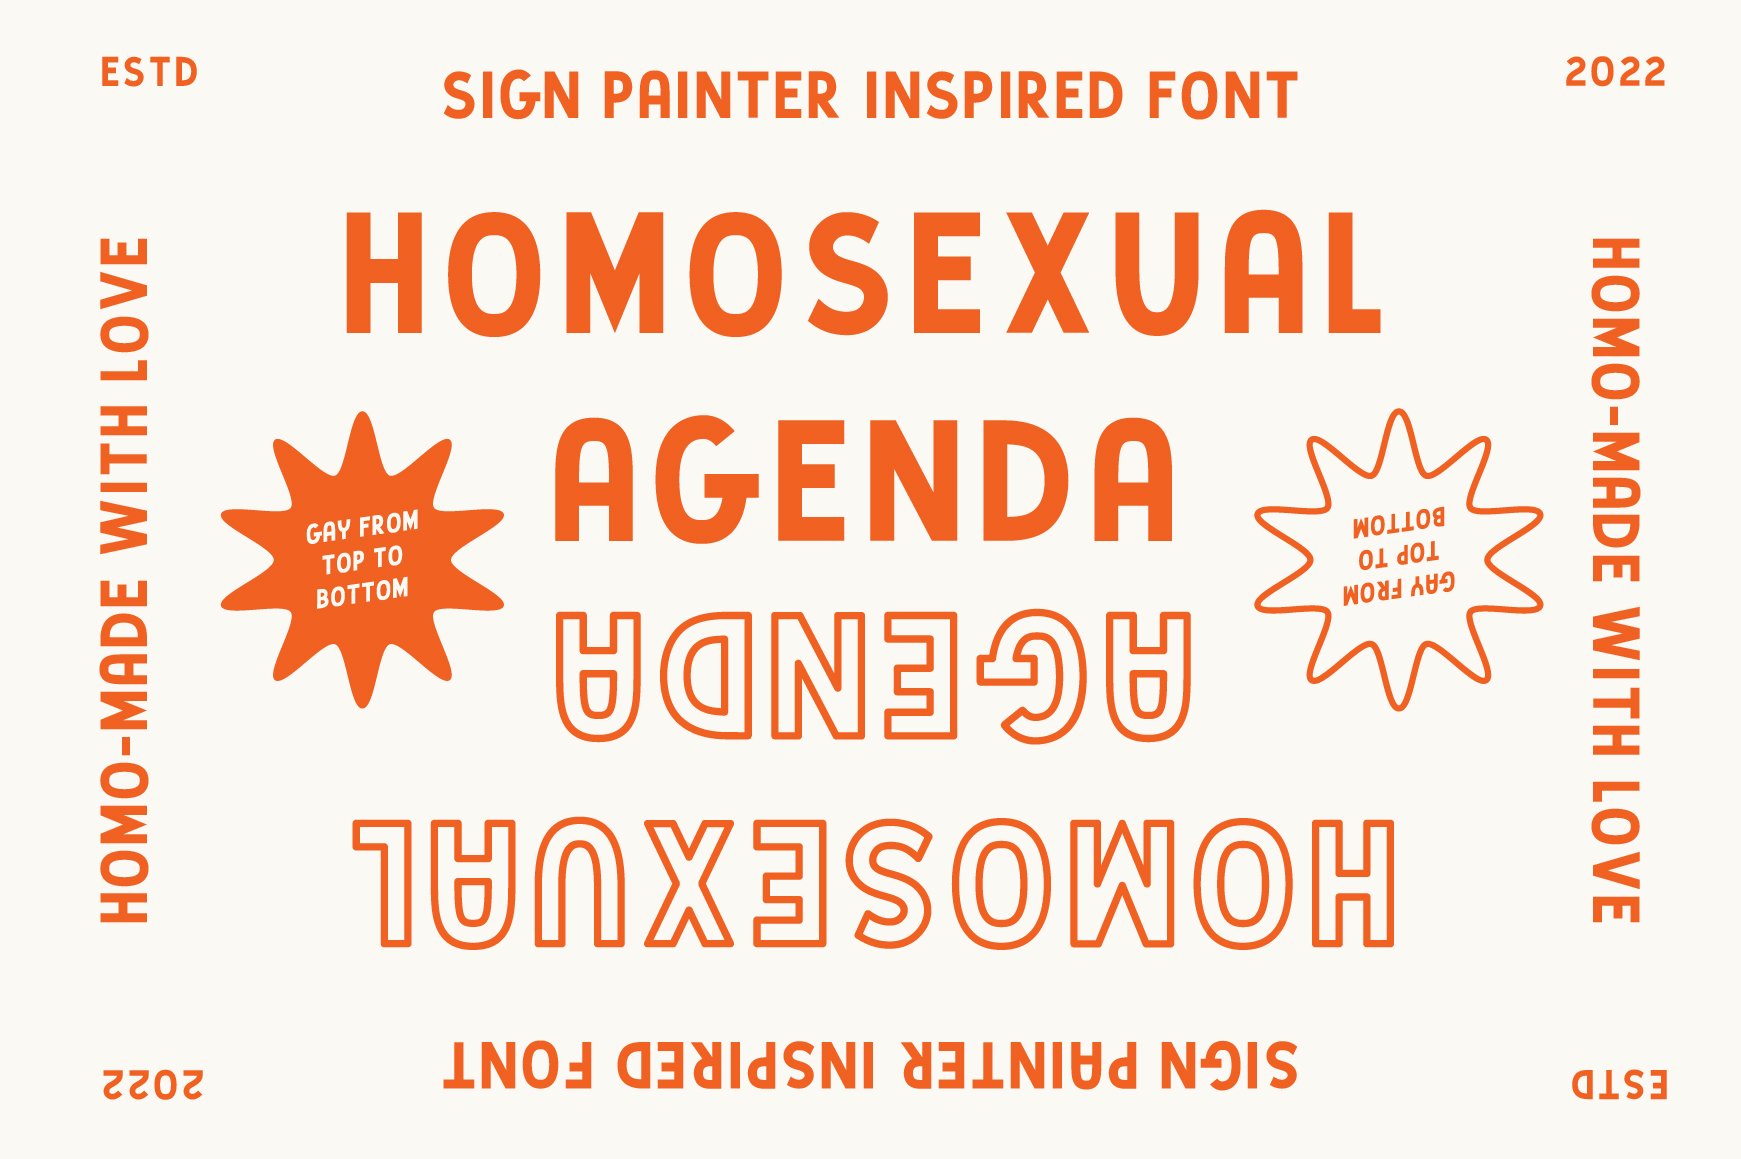 homosexual agenda trc 11 174